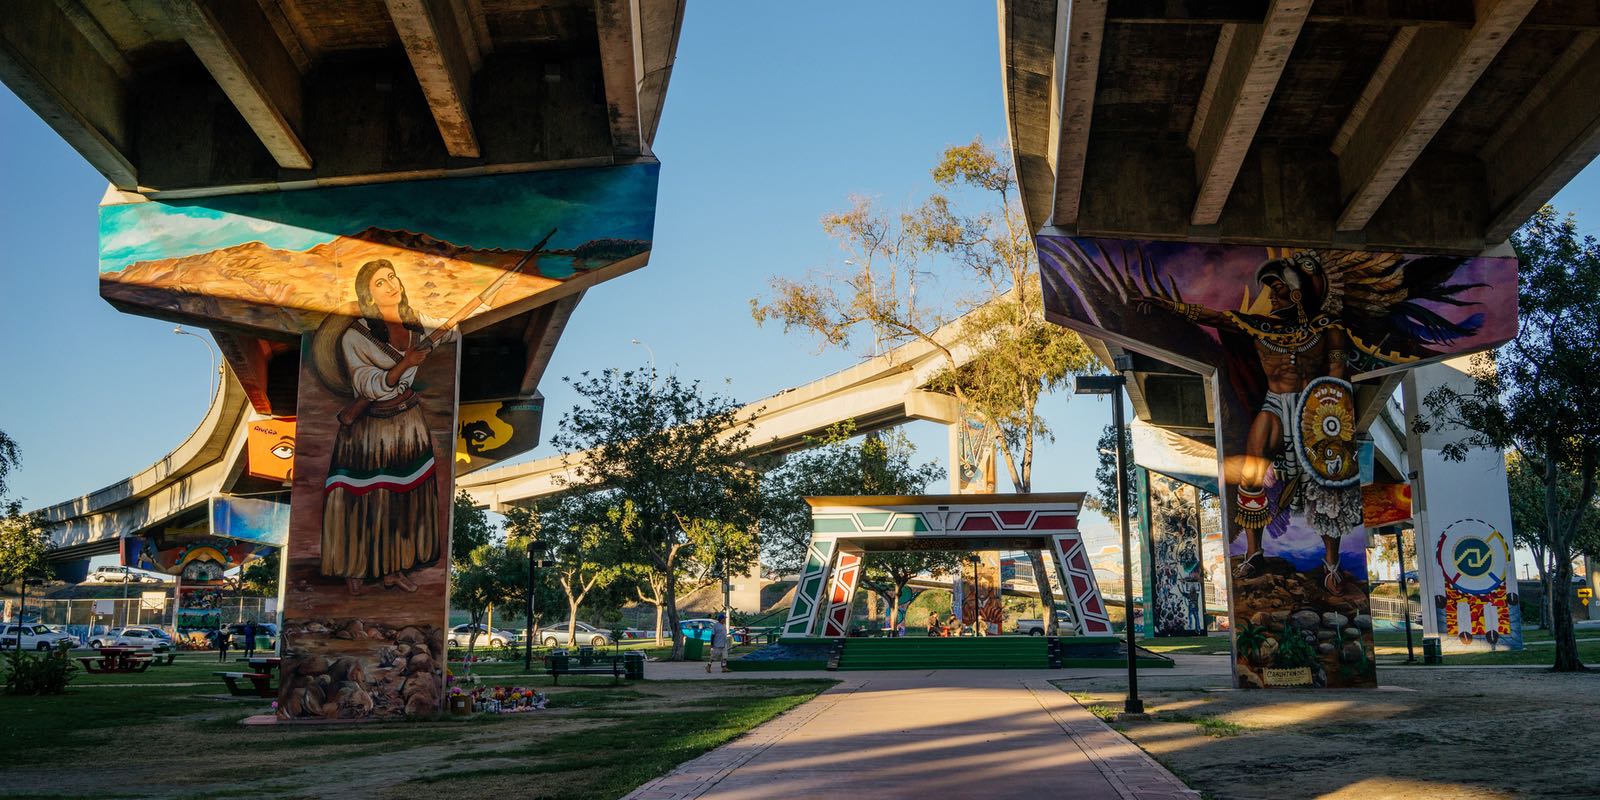 Chicano Park - Barrio Logan - San Diego Outdoor Art